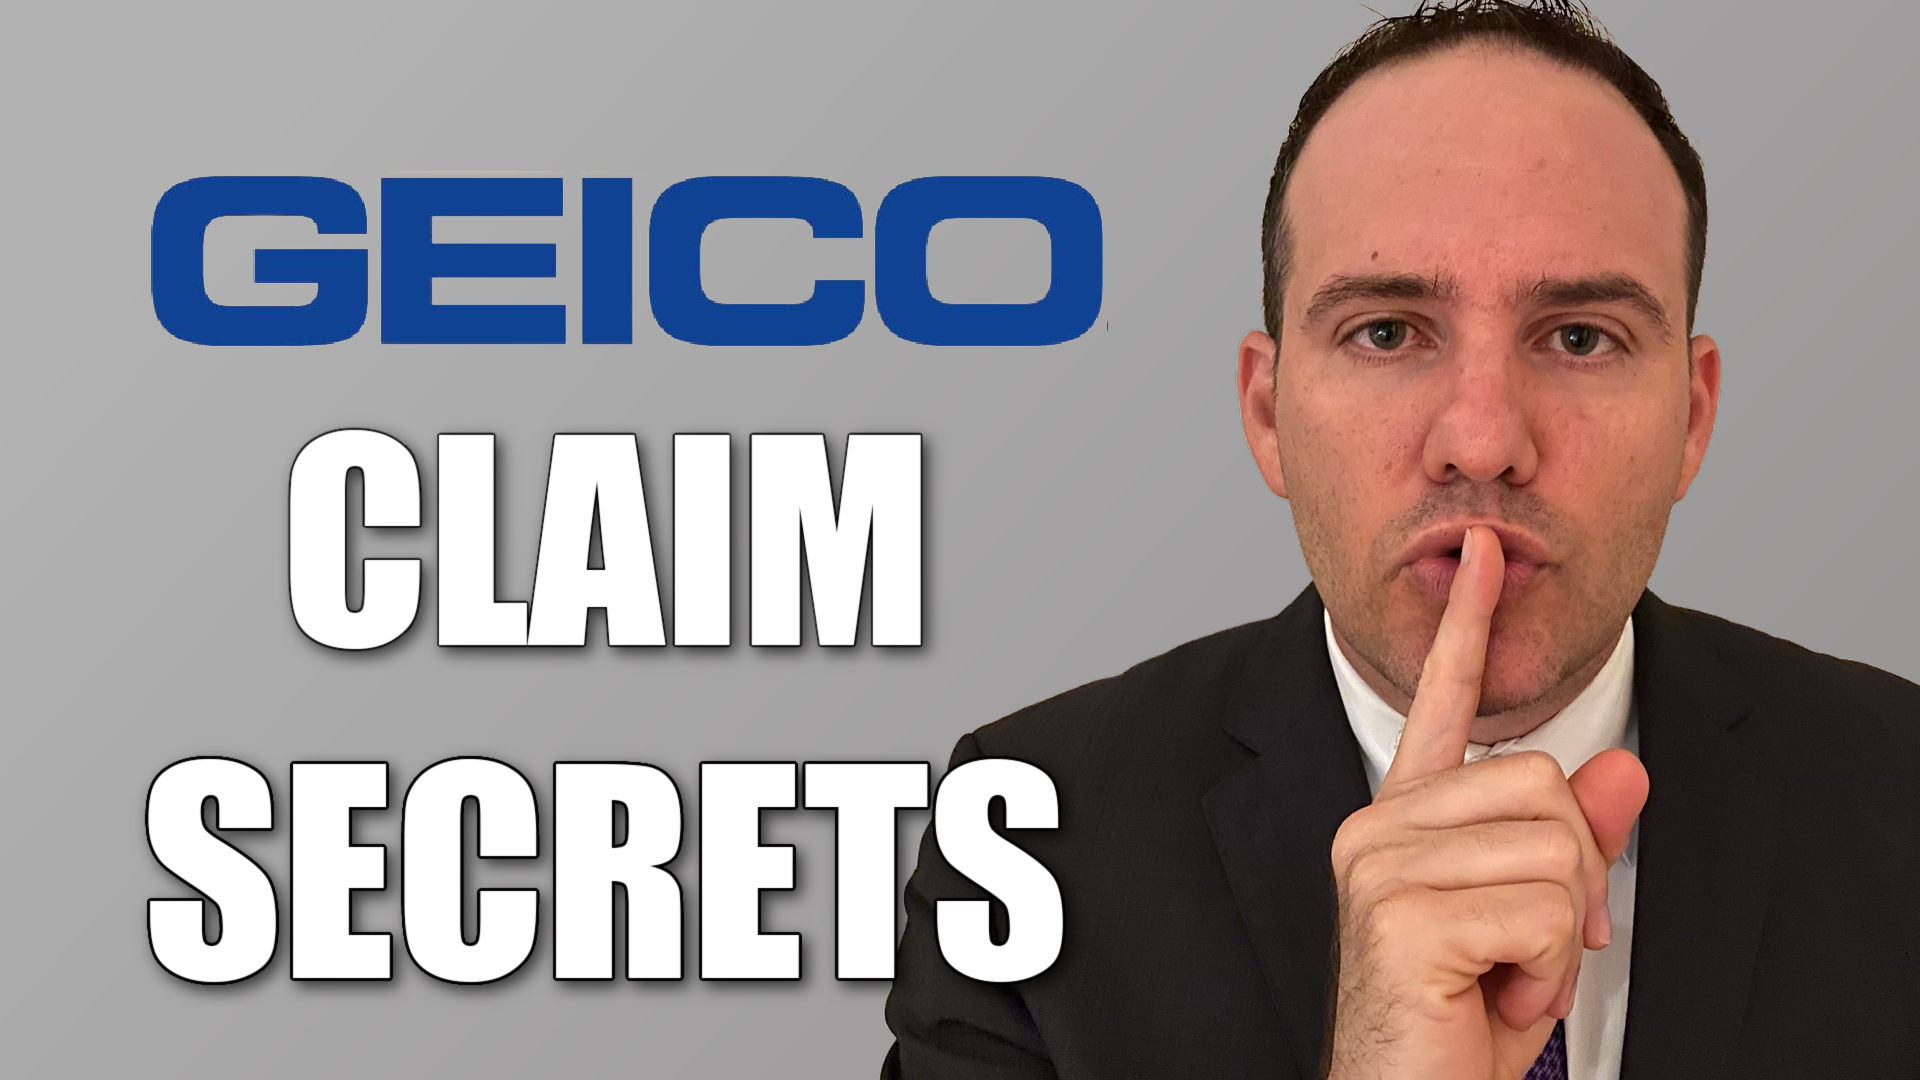 GEICO Claim Secrets (attorney Justin Ziegler)